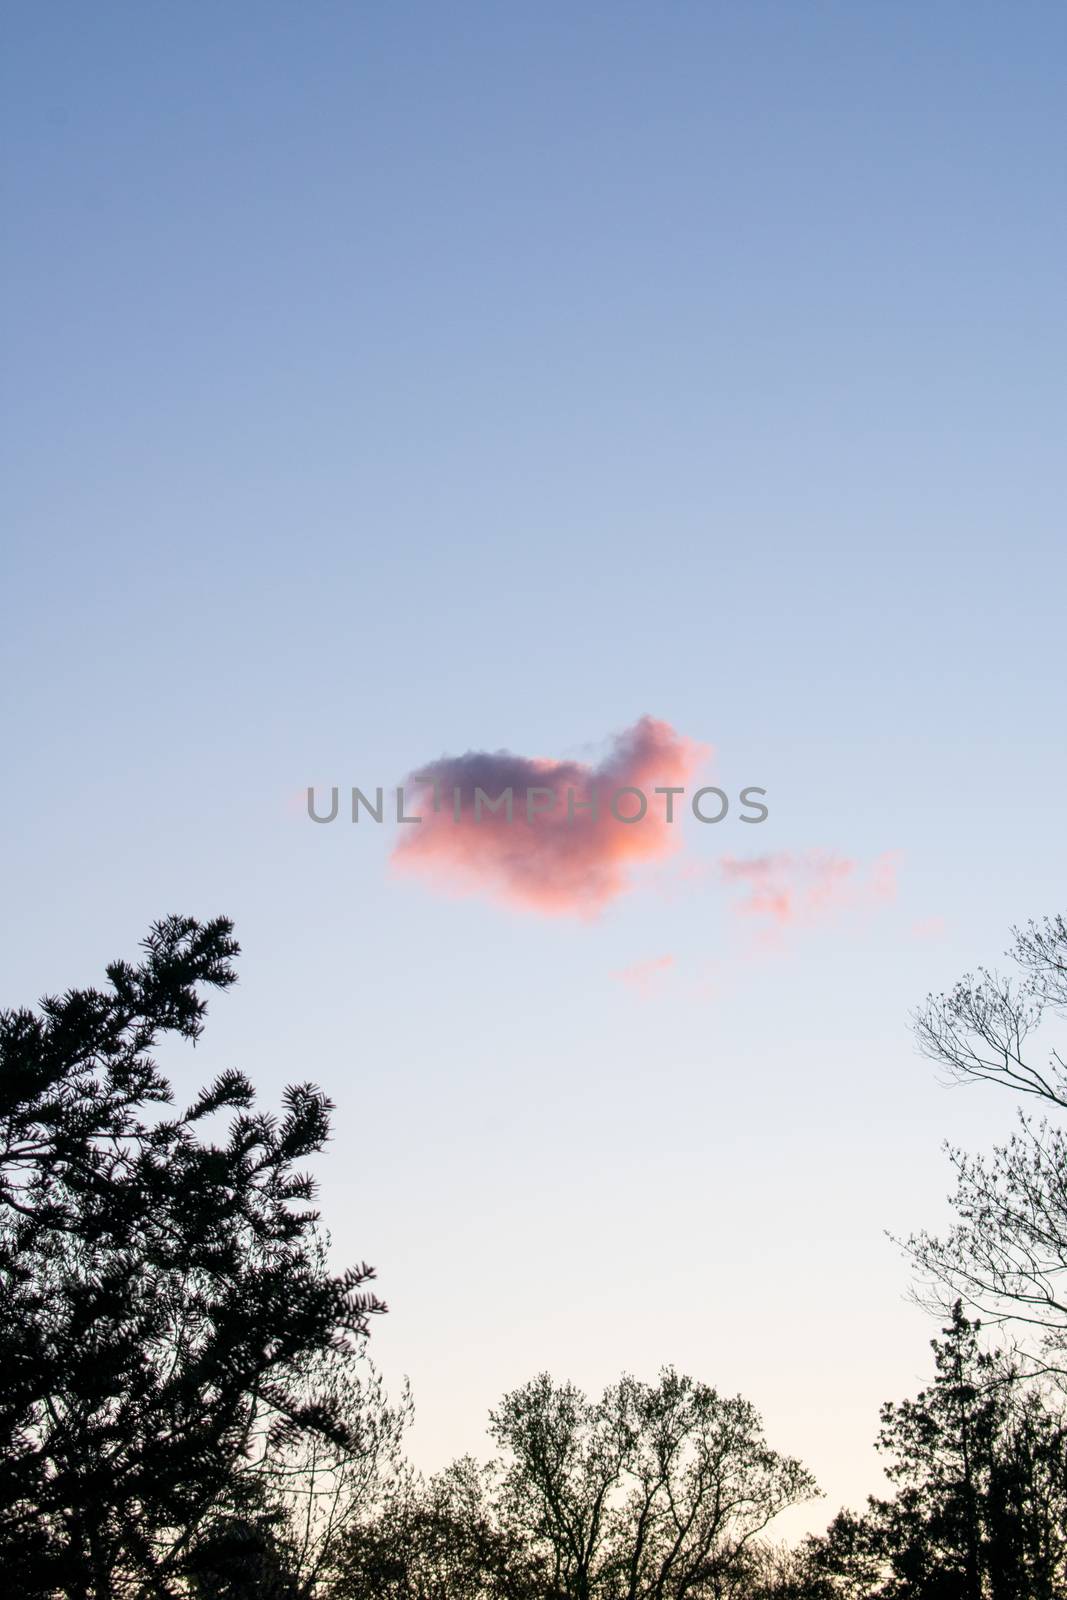 A Heart Shaped Pink Cloud on a Clear Blue Sky by bju12290